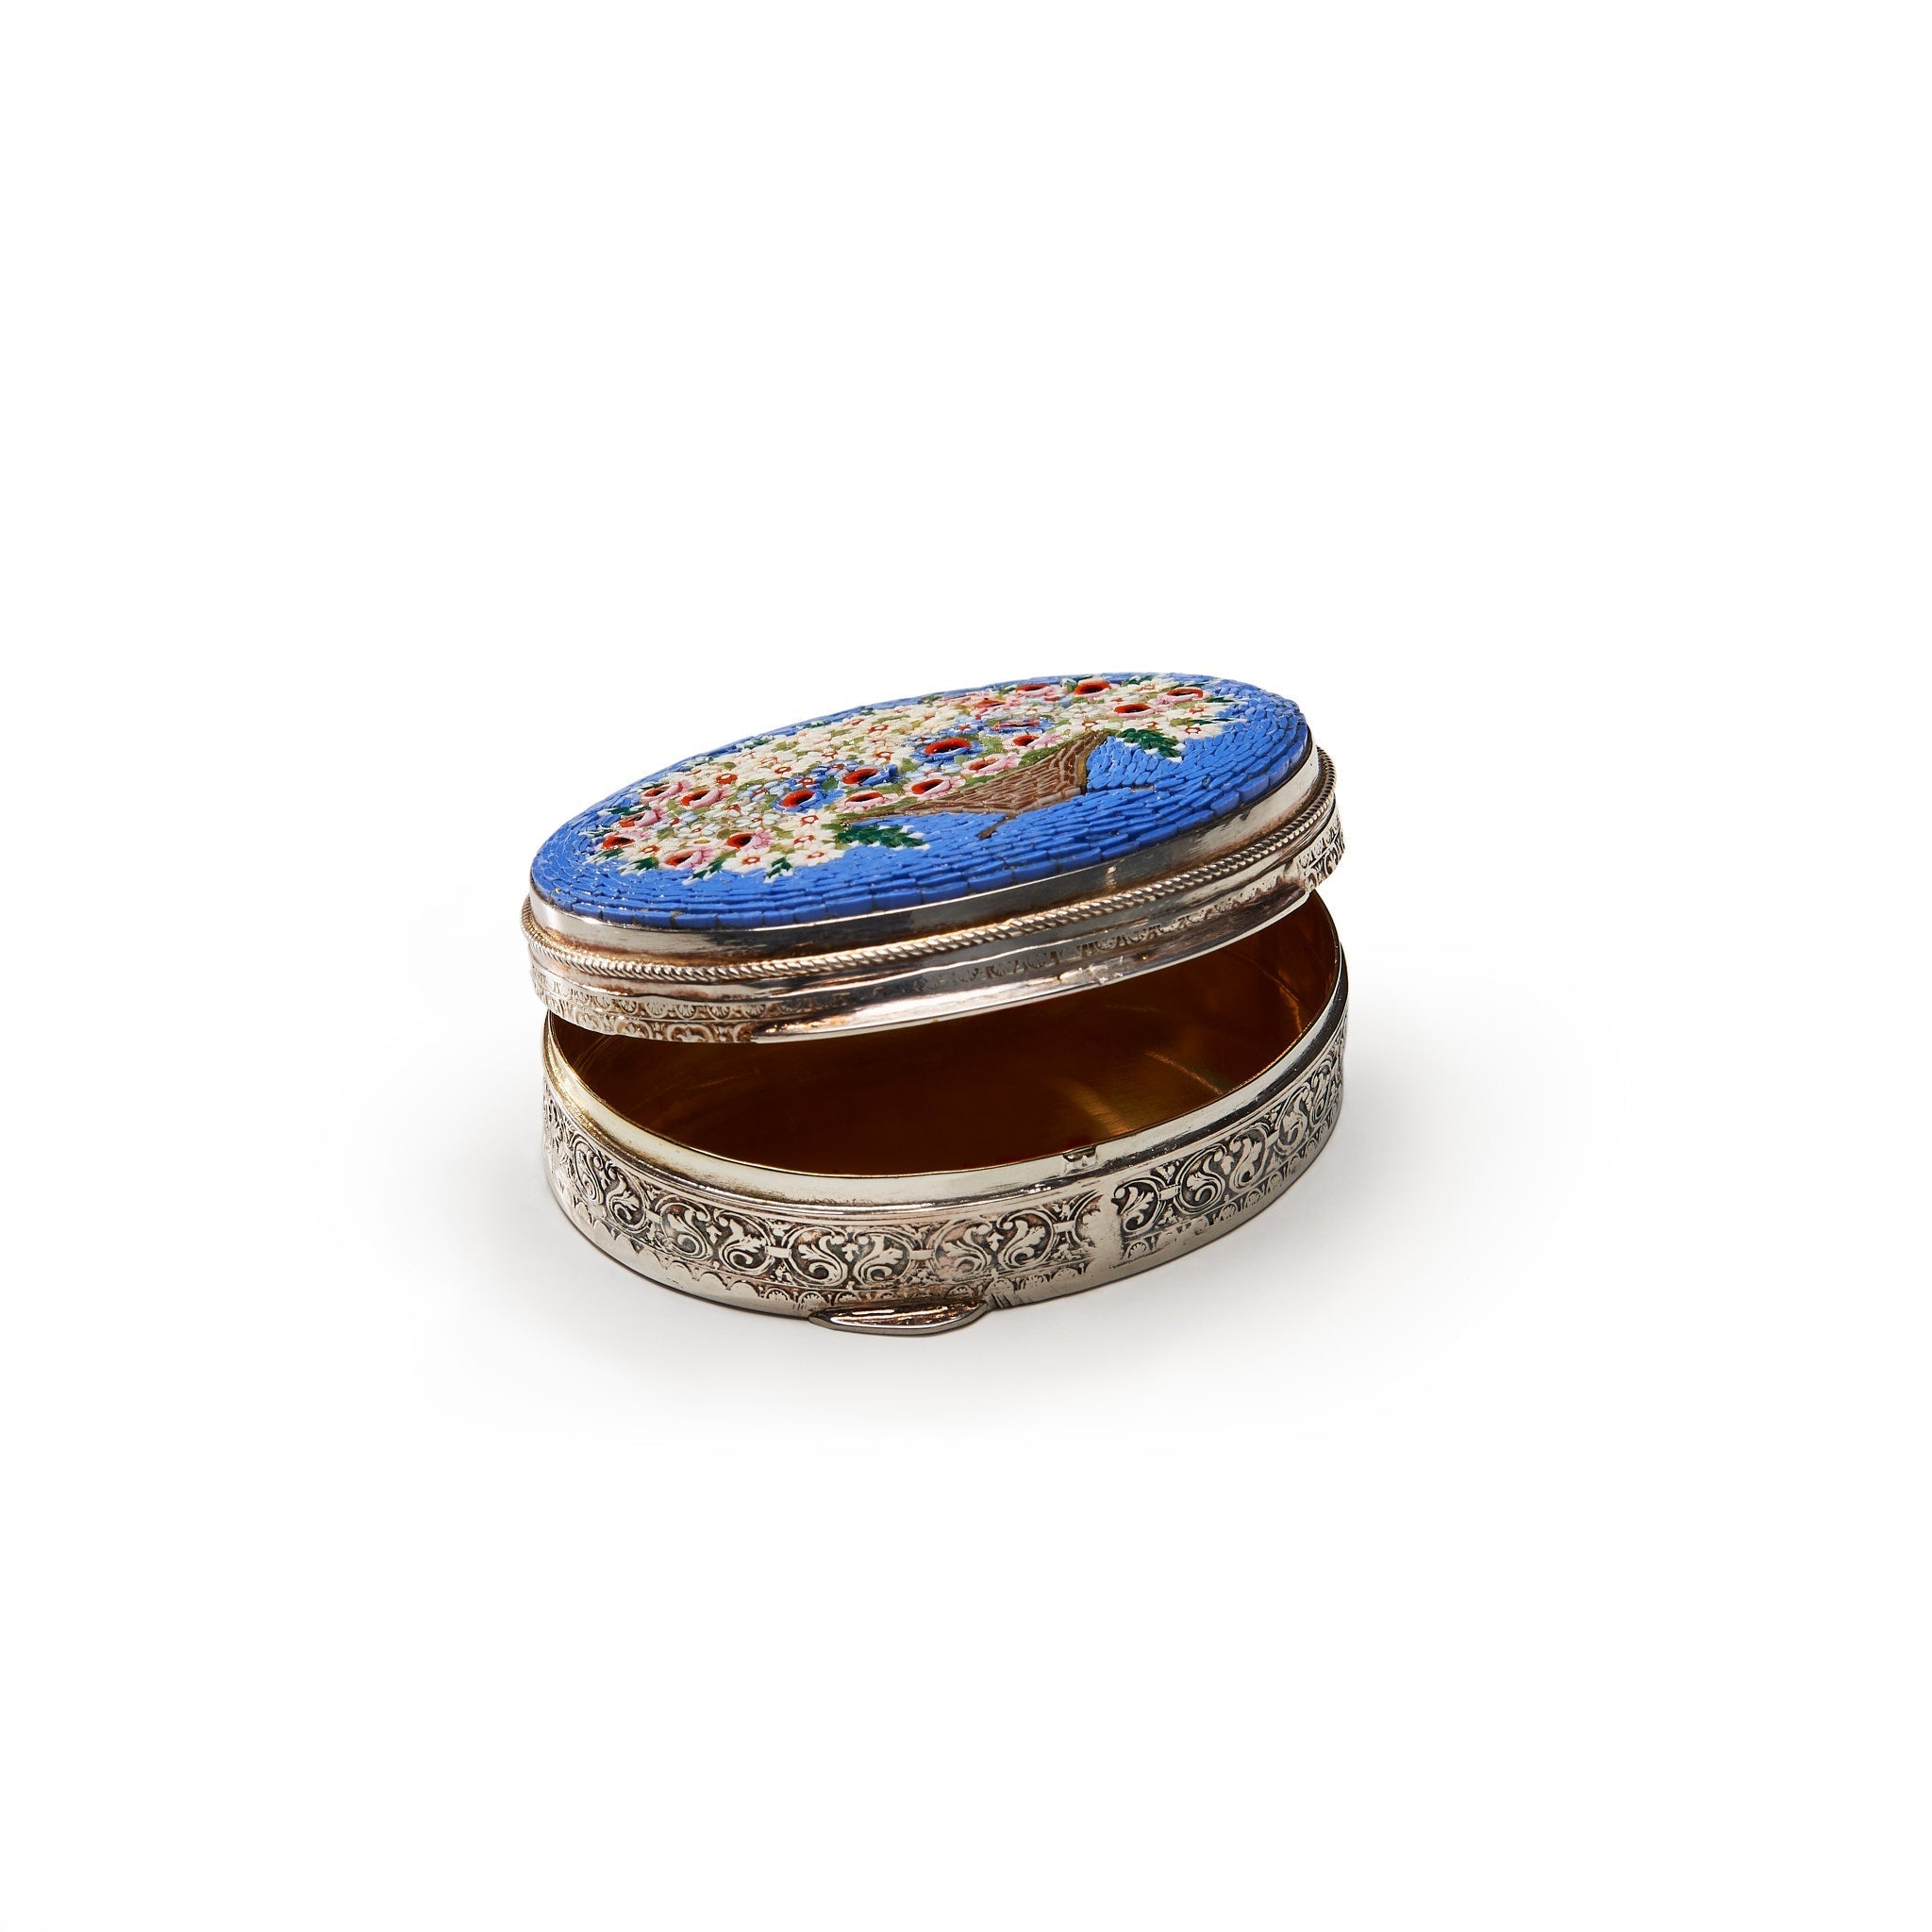 Traversari-Artisan-micro-Mosaic-Product-Jewelry-box-flower-basket